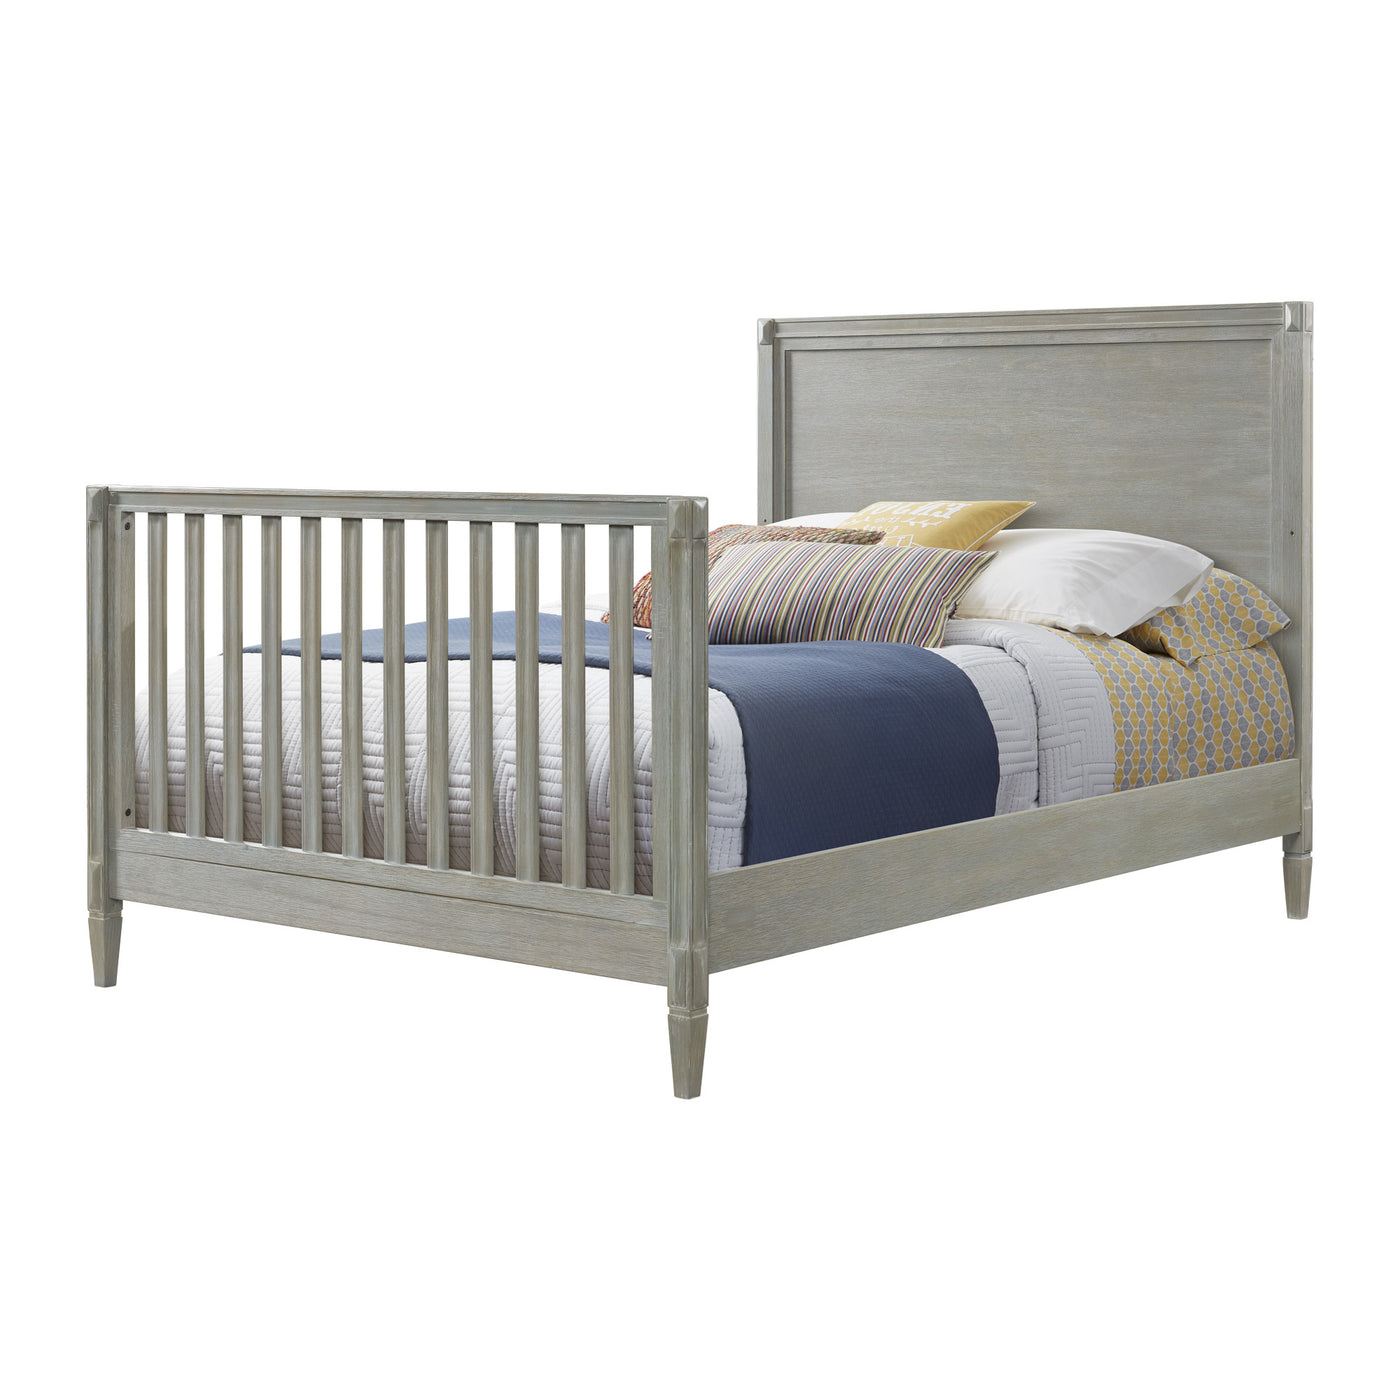 Westwood Vivian Full Bed Conversion Kit